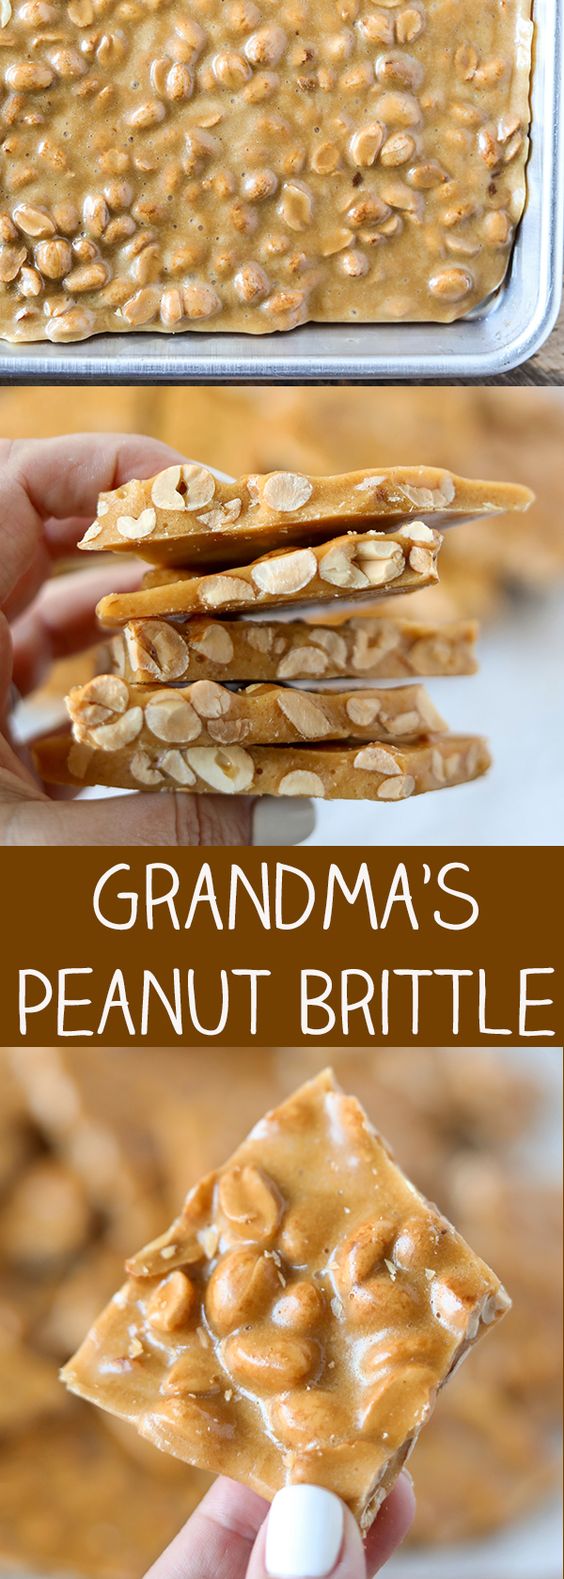 Grandma's Peanut Brittle Recipe